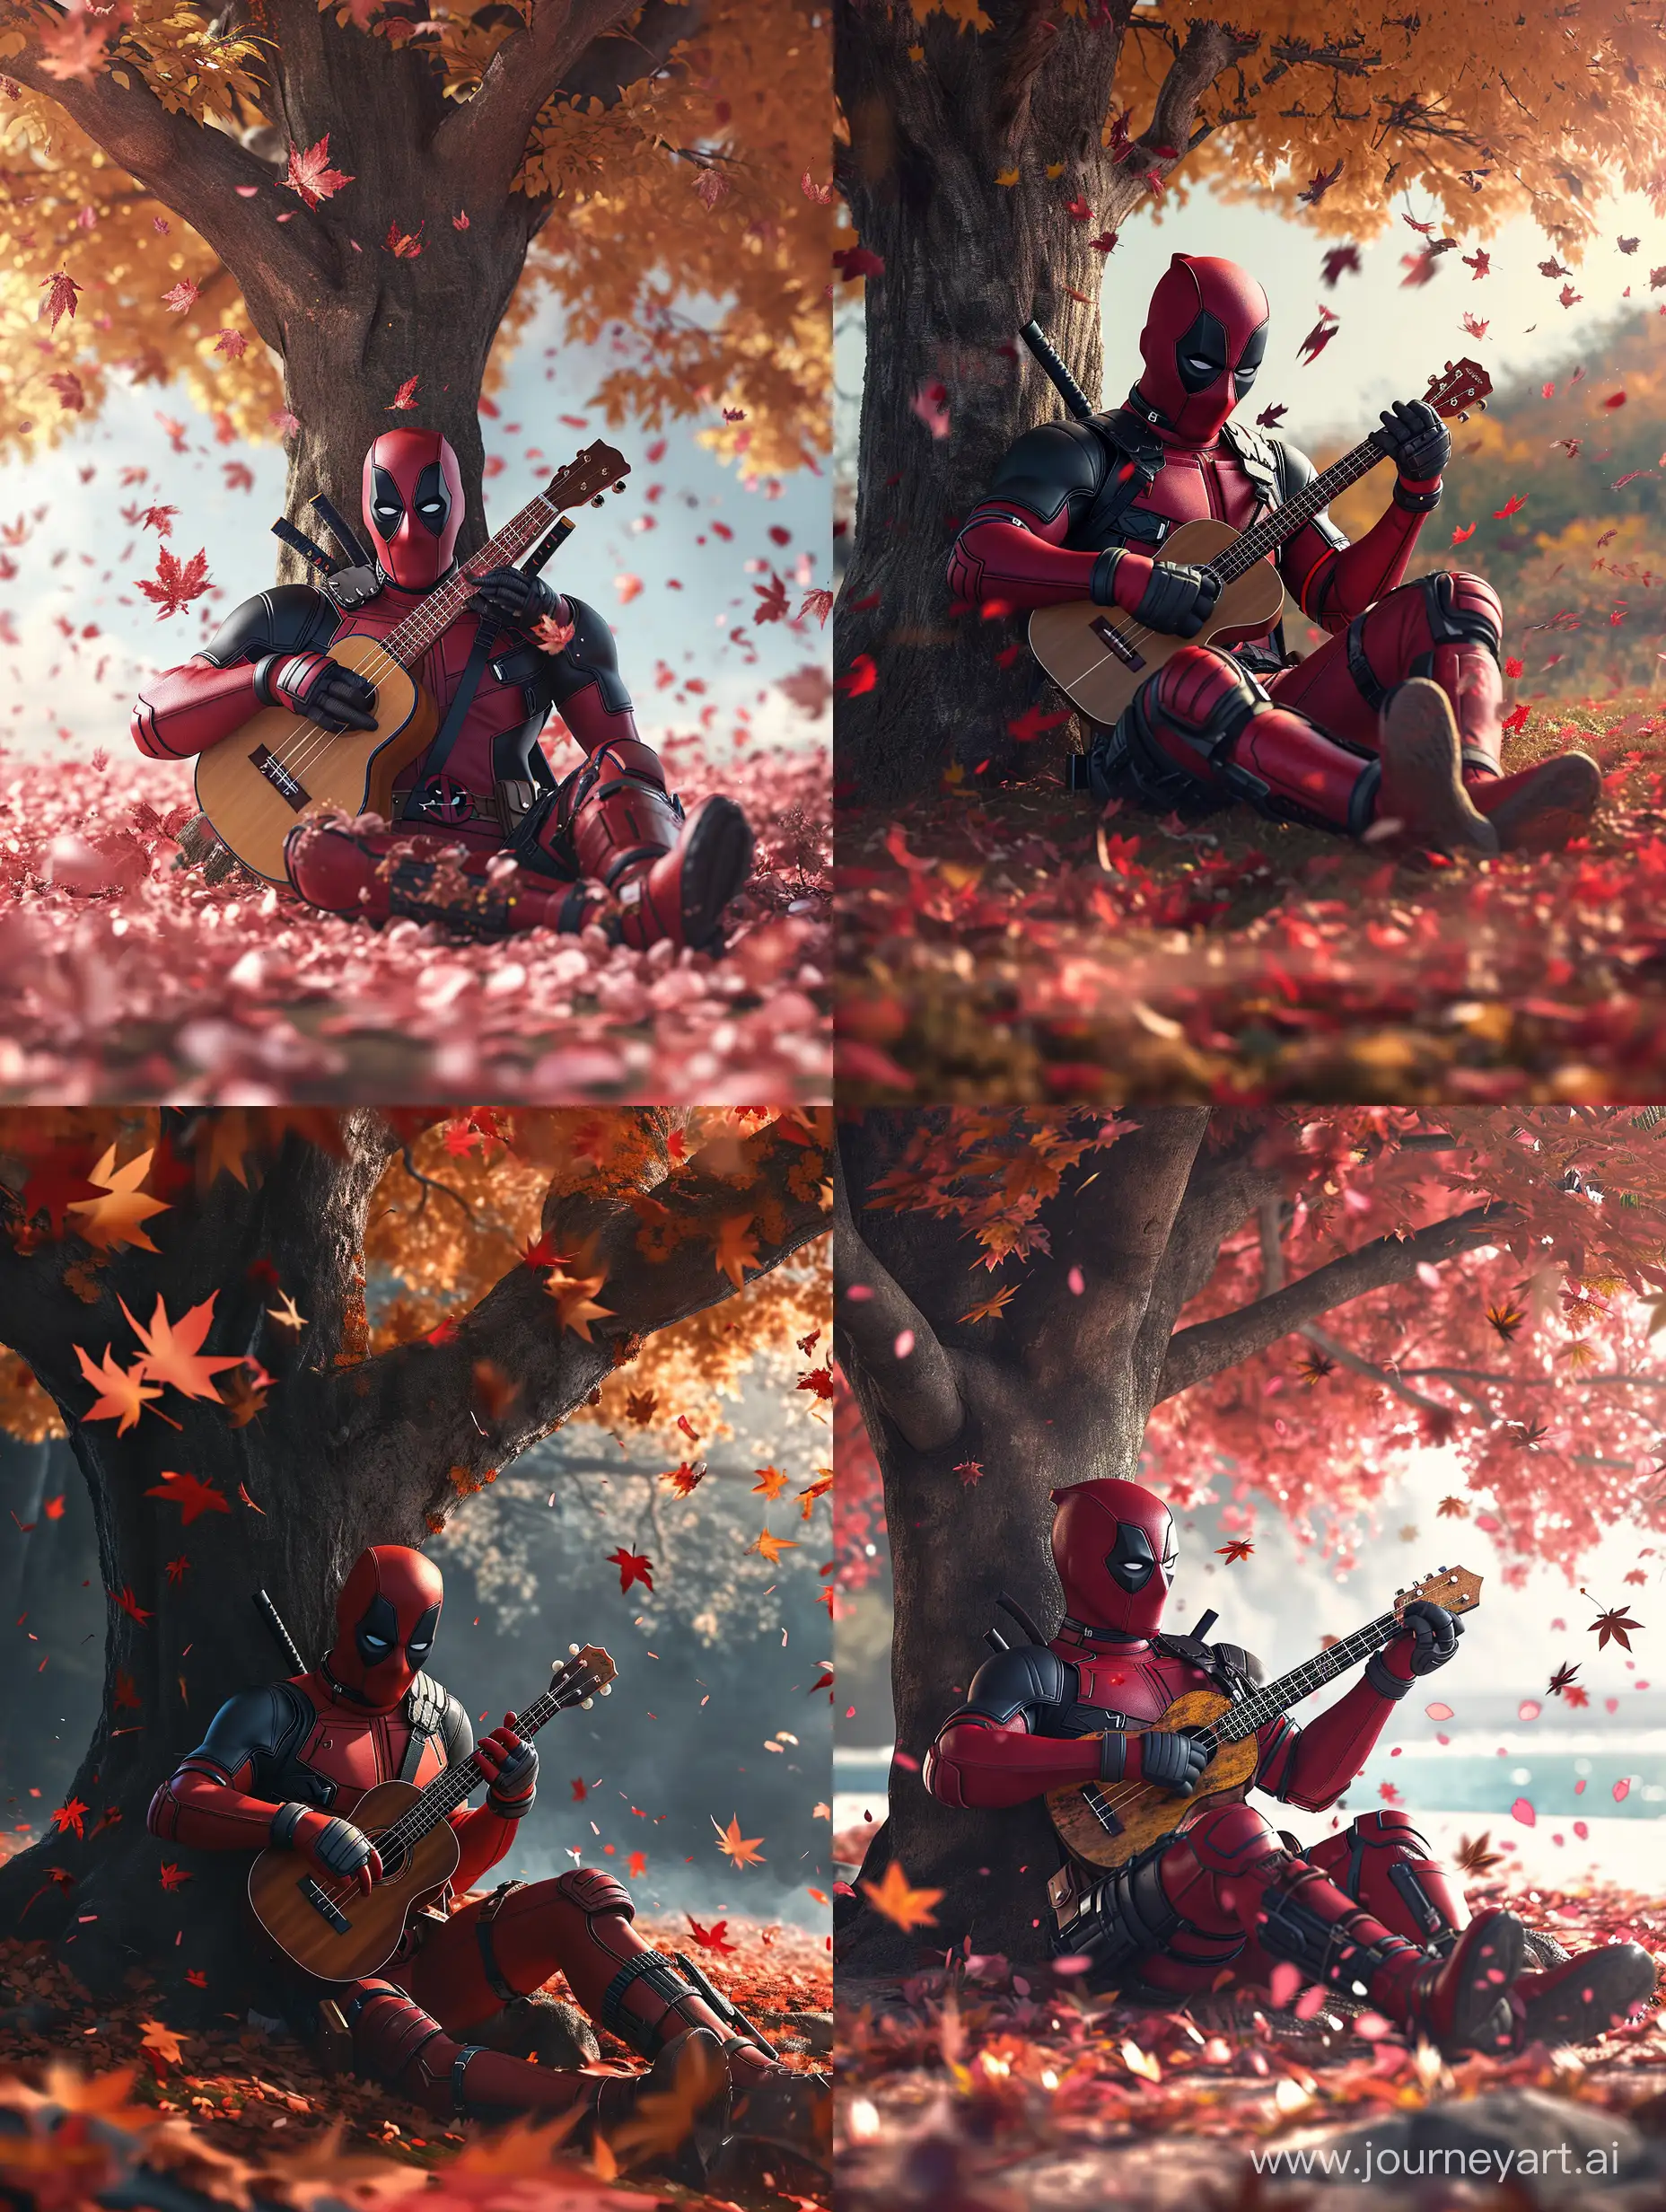 Deadpool-Playing-Ukulele-under-Sakura-Tree-Cute-and-Photorealistic-4K-Scene